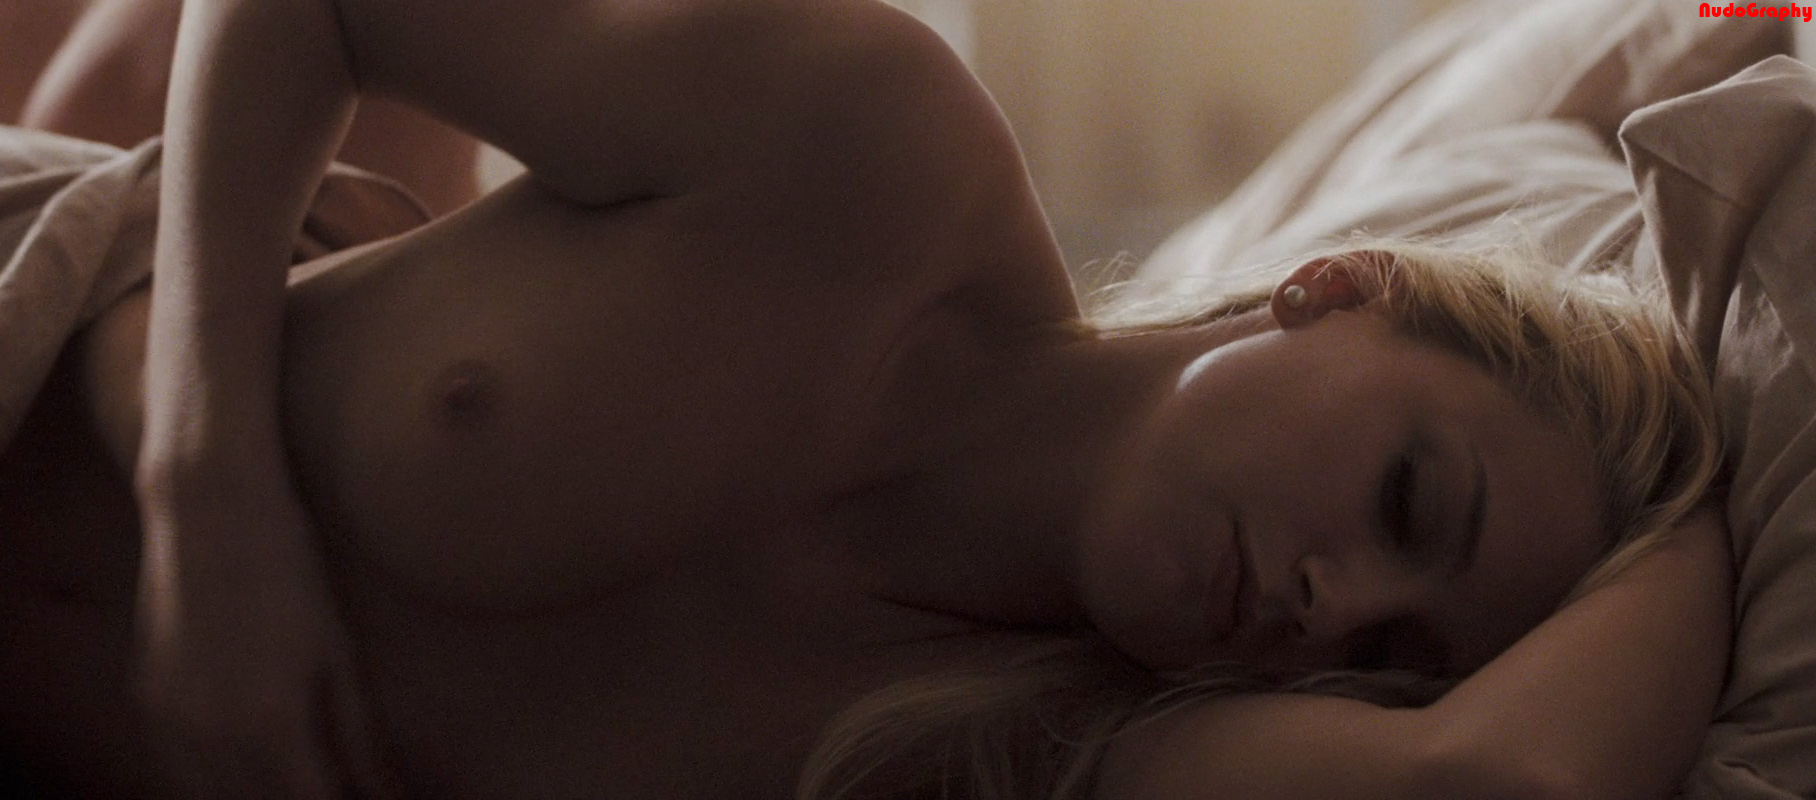 Nude Celebs in HD - Amber Heard - picture - 2009_8/original/Amber_Heard-The...